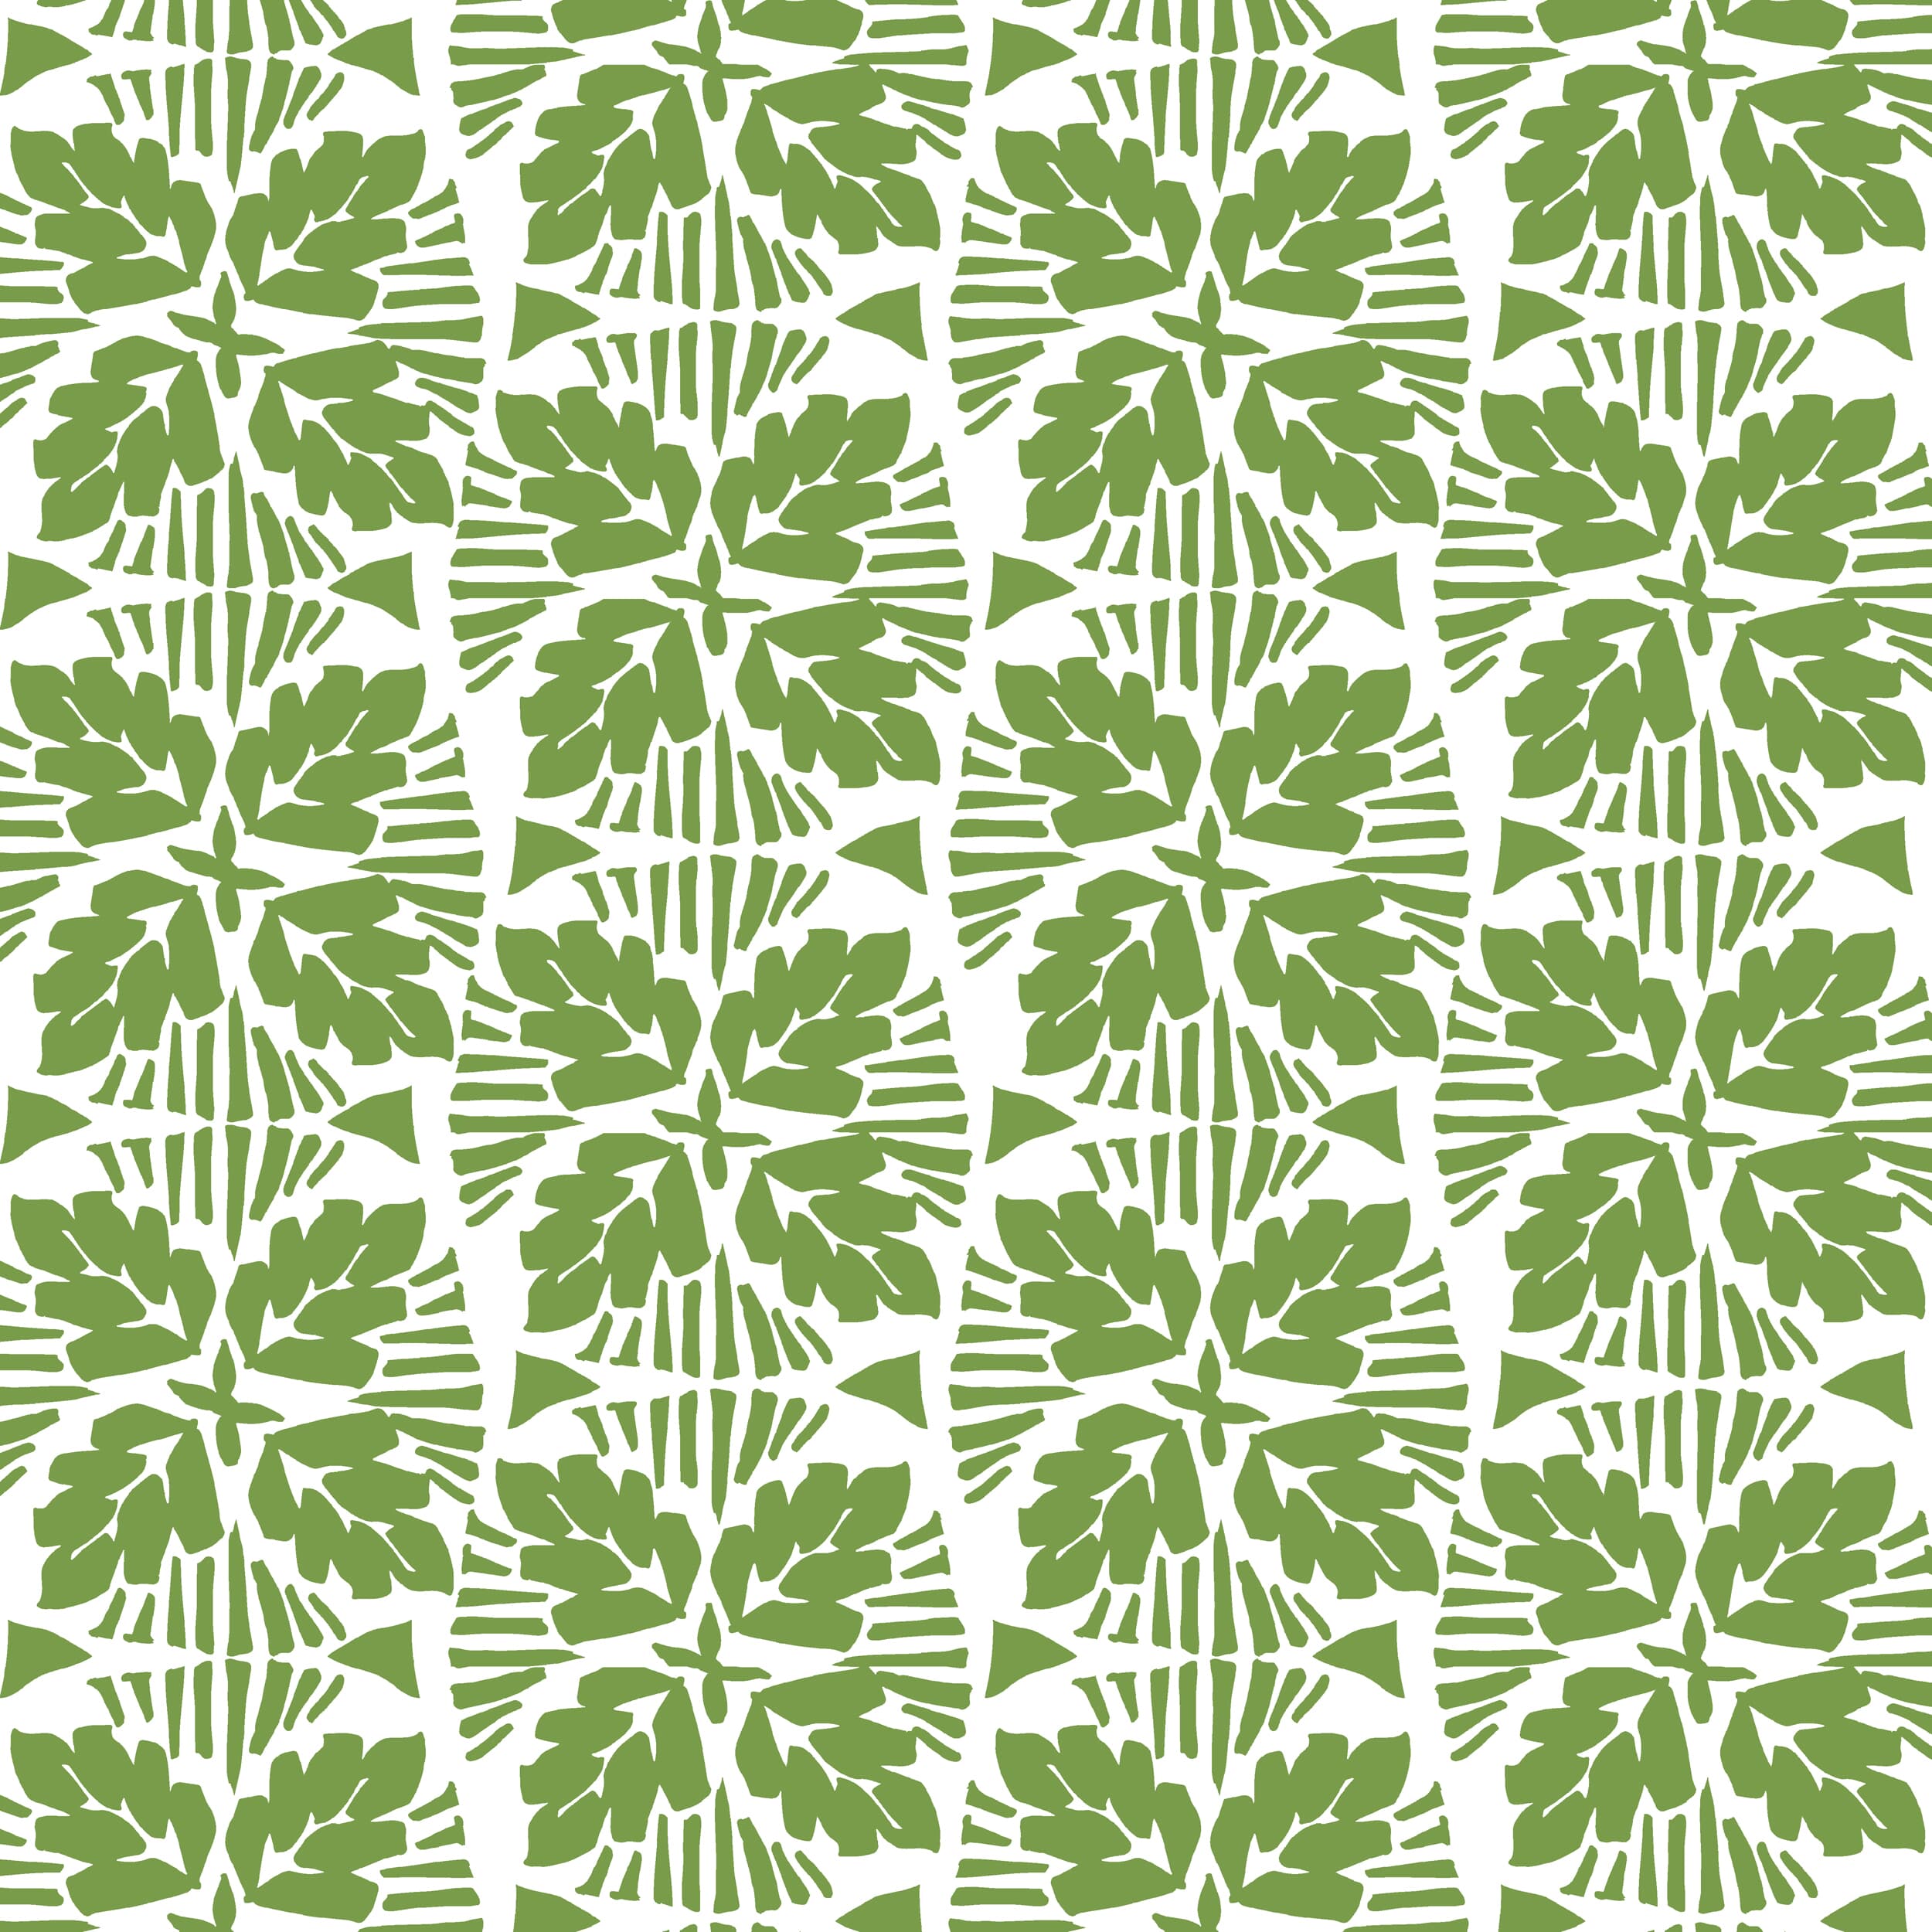 W02vl-2 Keylargo Grass Wallpaper by Stout Fabric